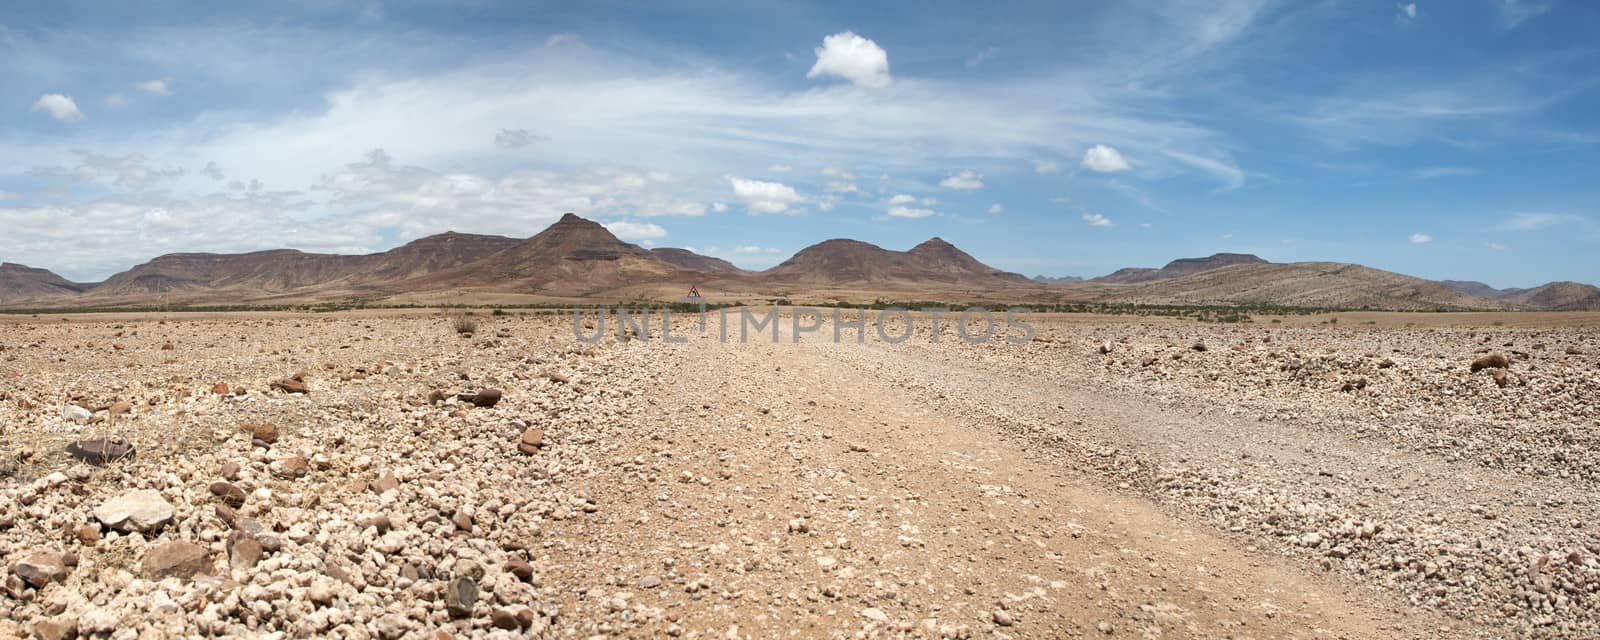 Surreal panorama of the Kaokoland game reserve, Namibia.